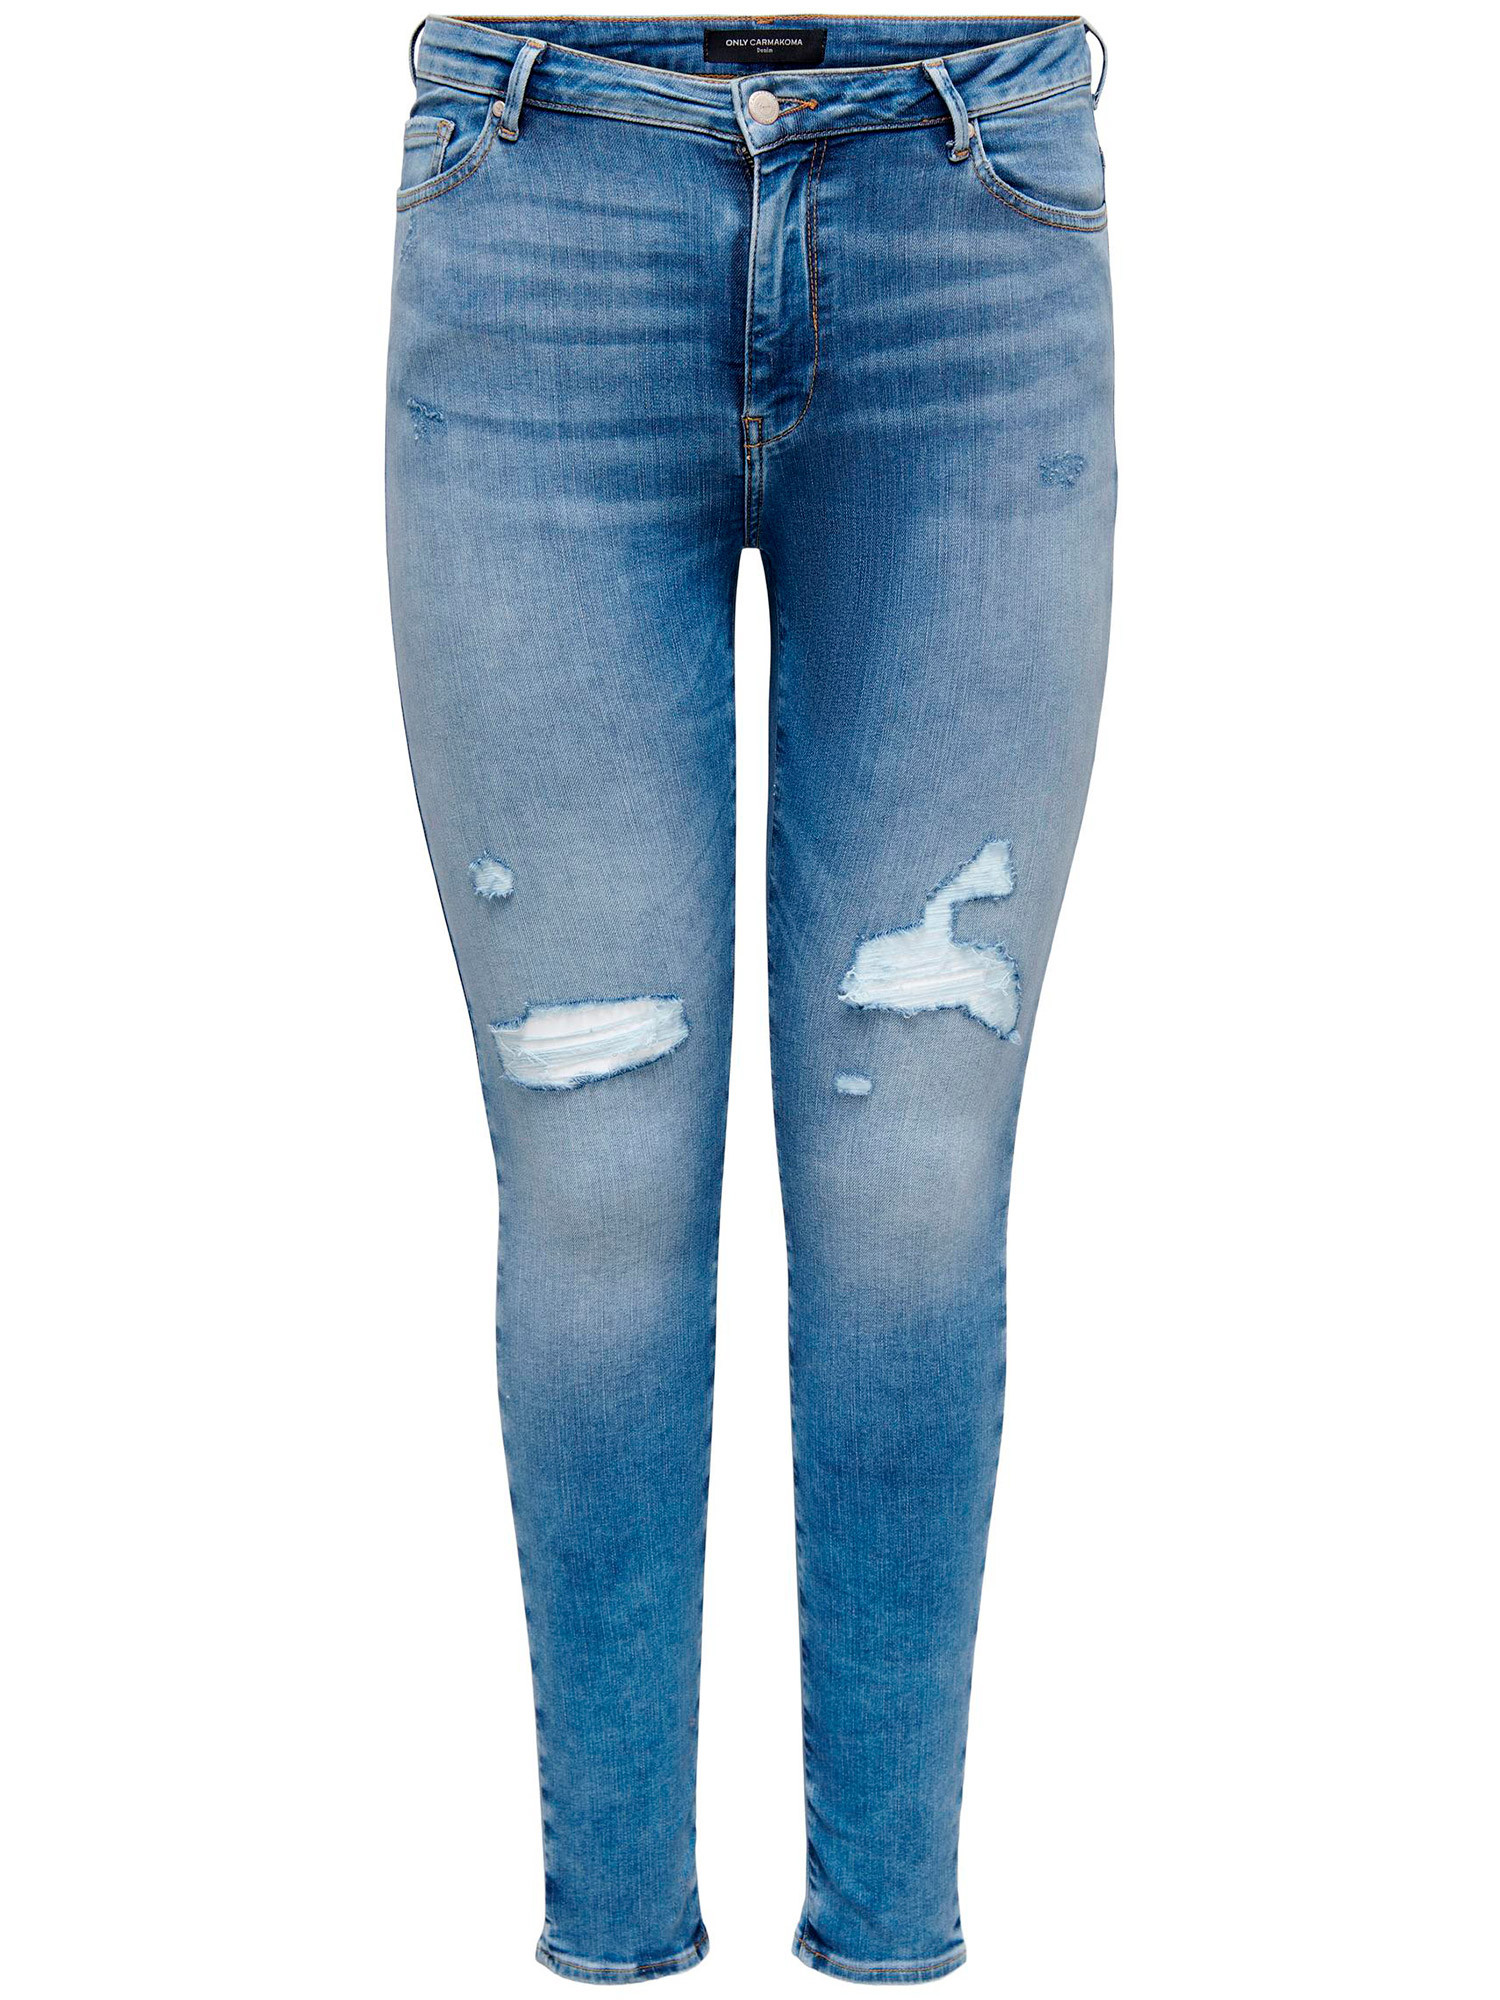 MILY - Ljusblå jeans i stretchig bomullsdenim